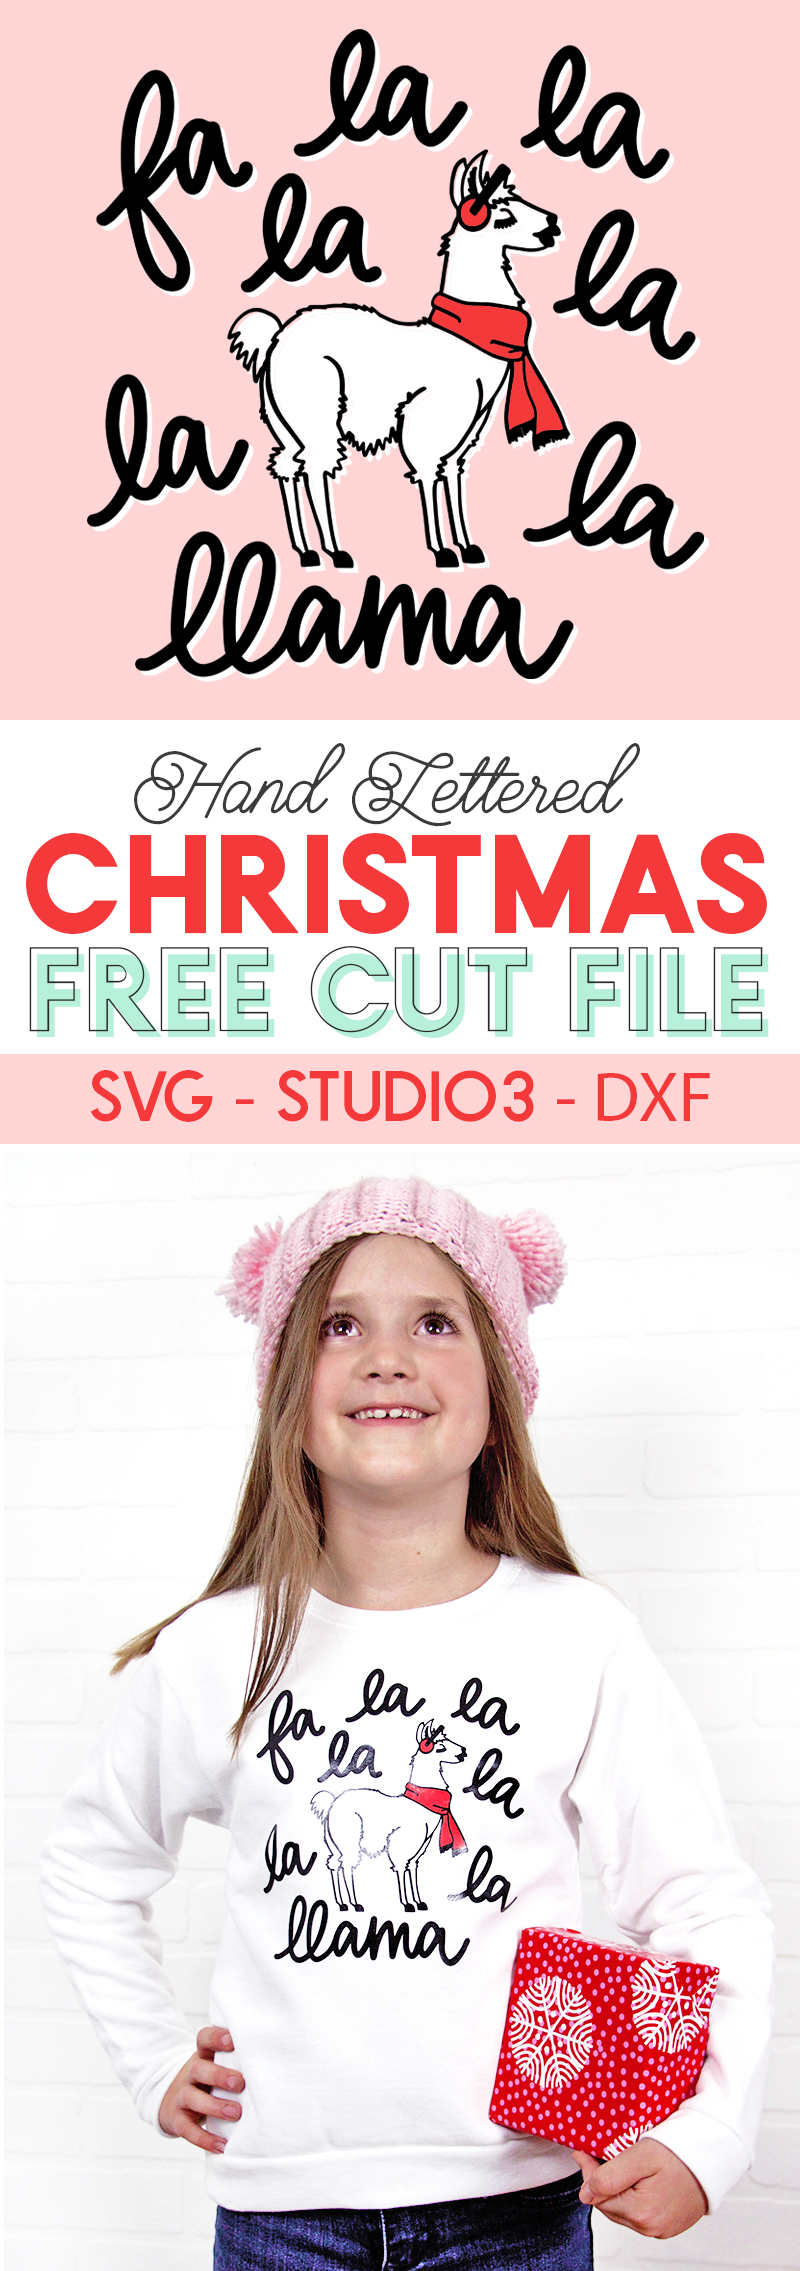 Download Fa La Llama Diy Llama Christmas Sweater With Free Cut File Persia Lou PSD Mockup Templates